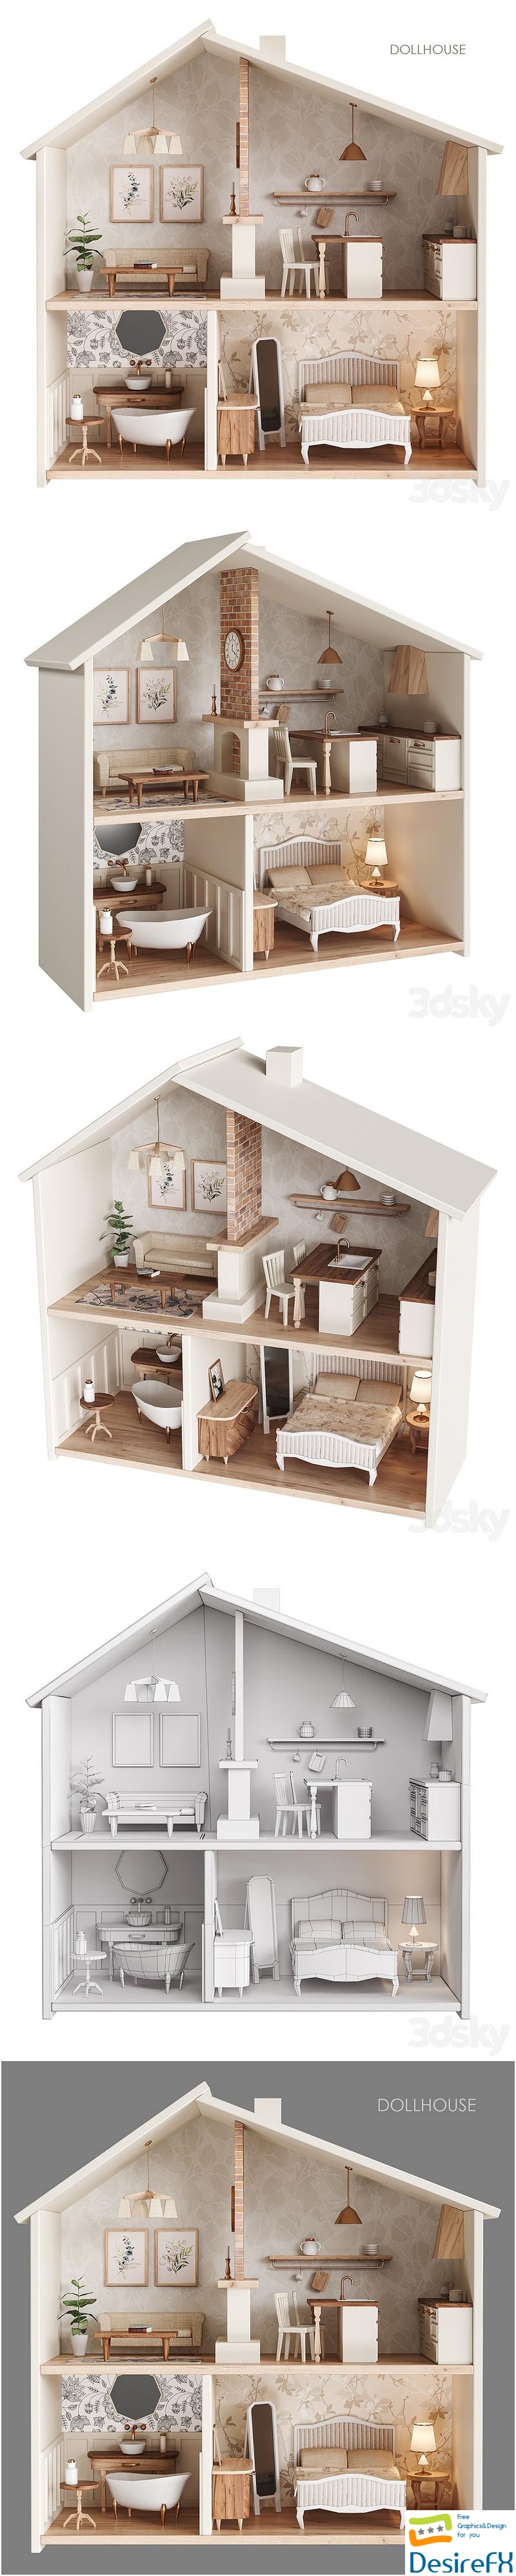 Dollhouse Retro 3D Model